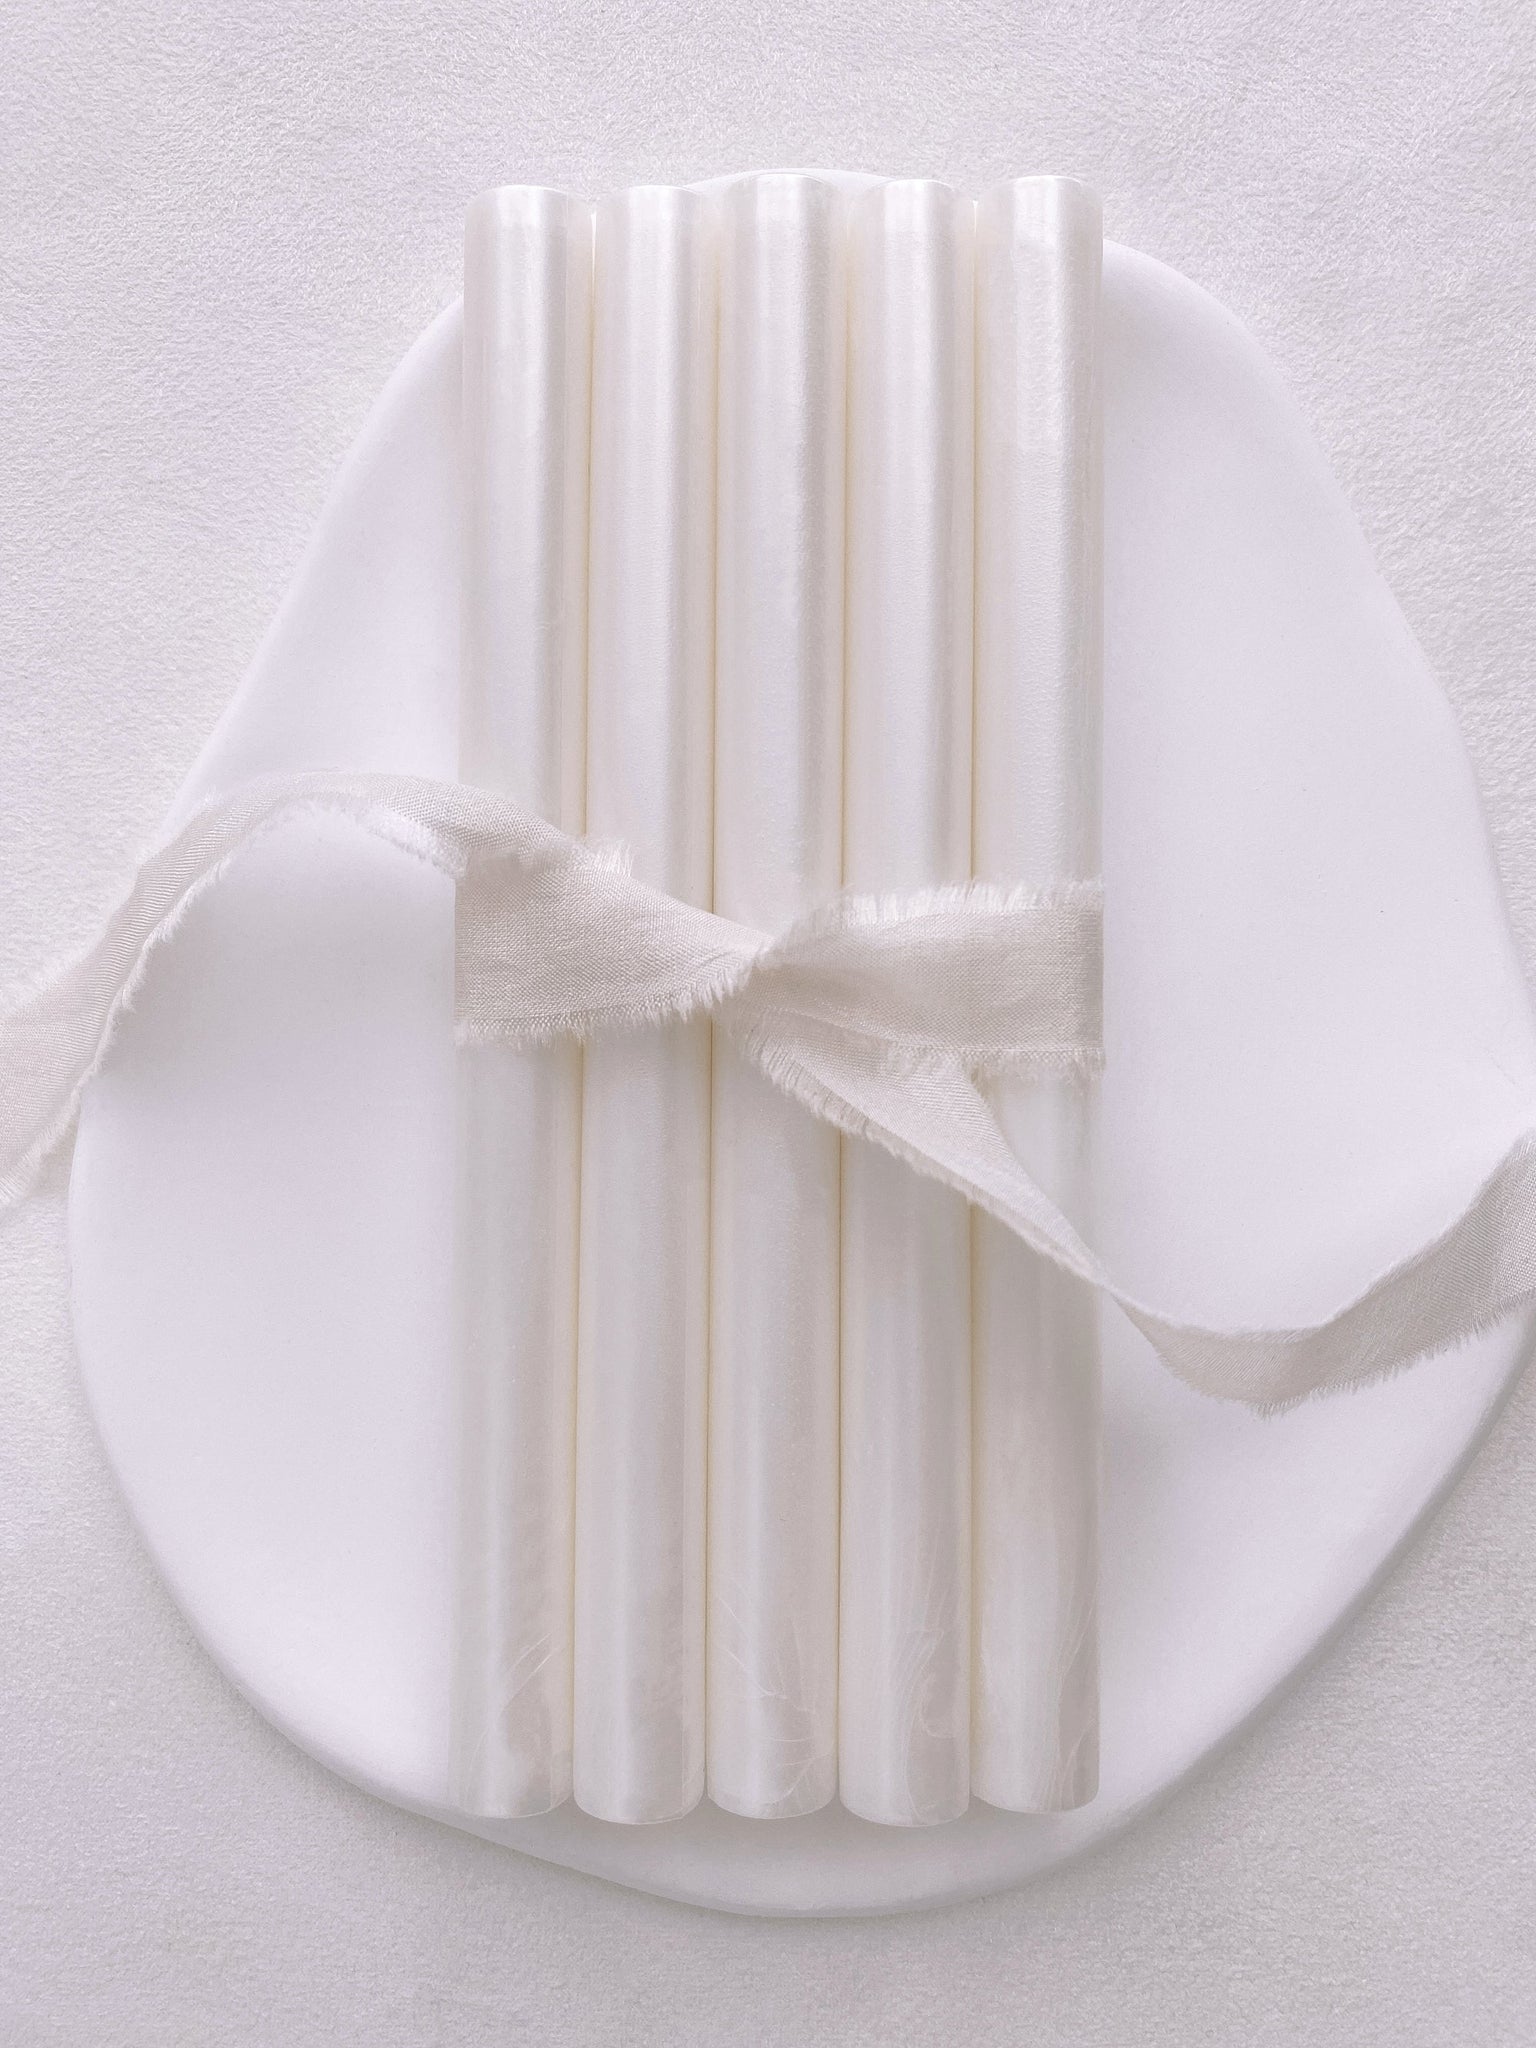 a set of 5 white pearl sealing wax sticks